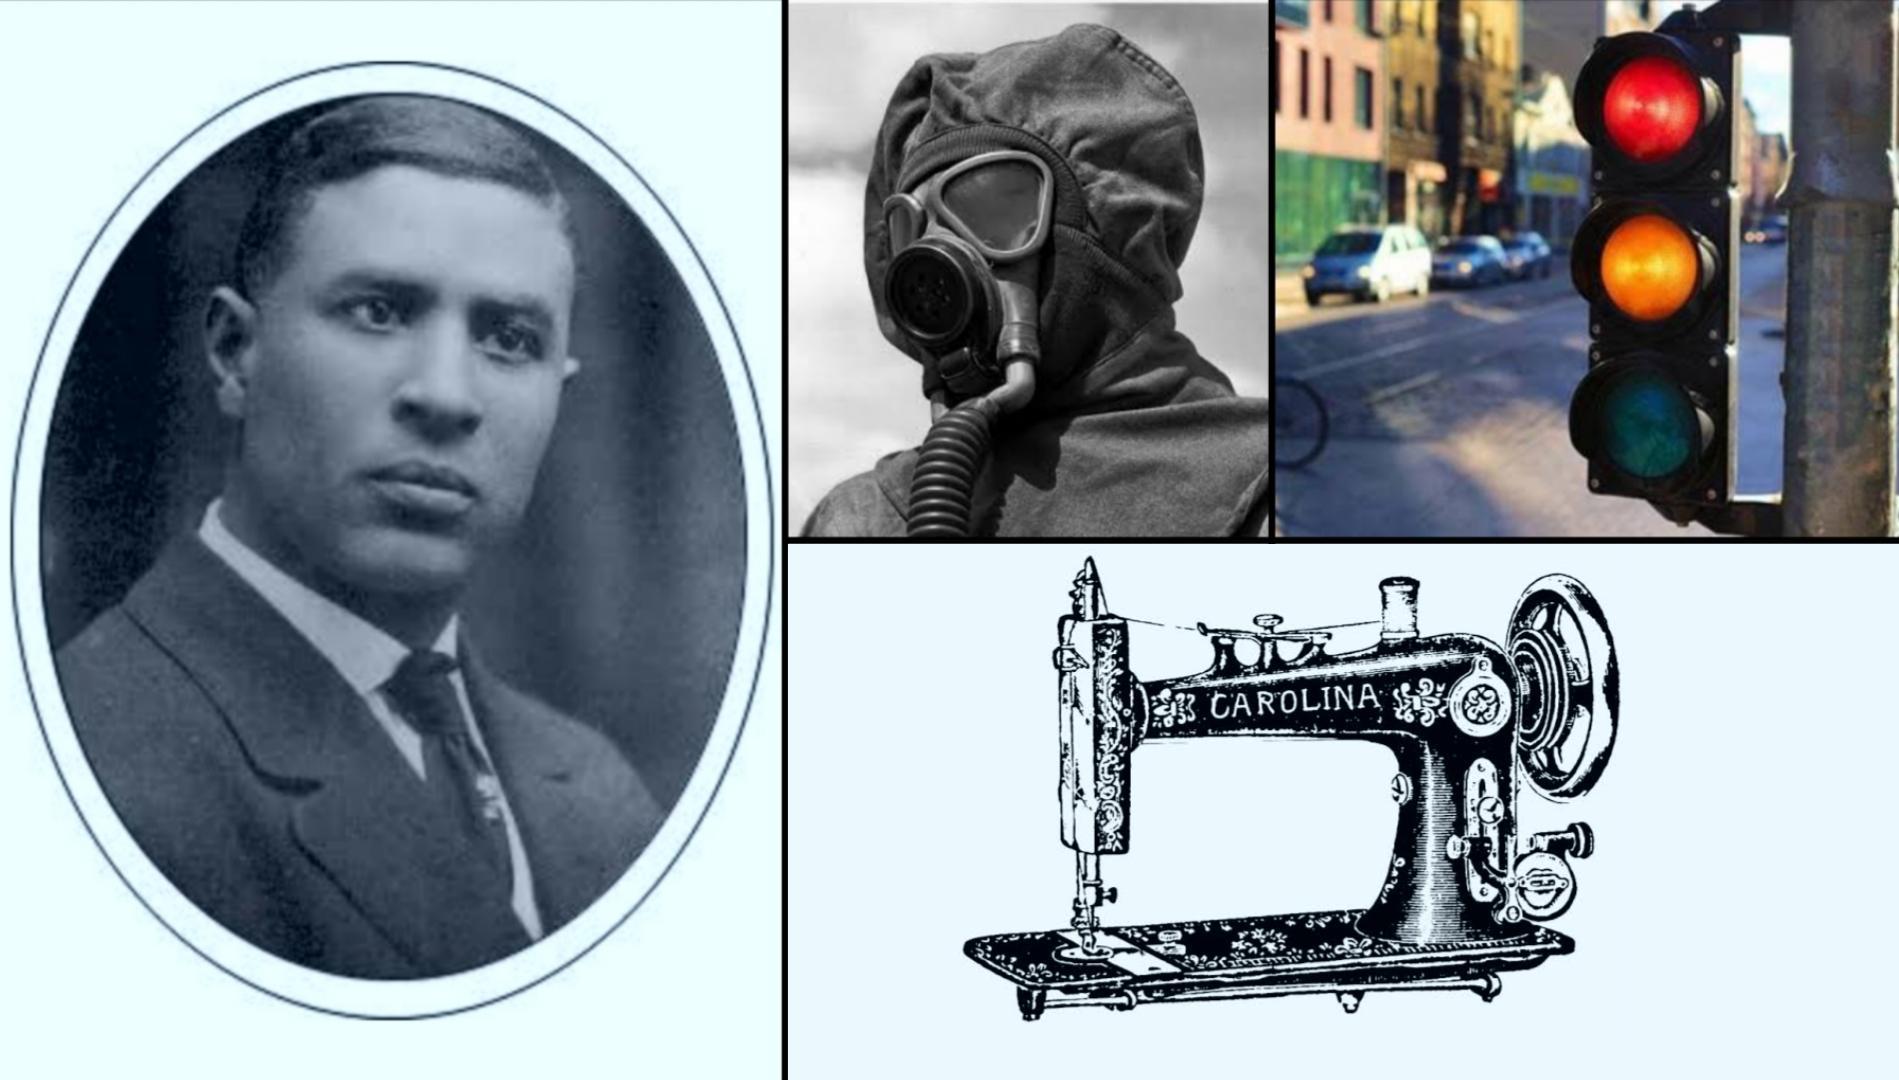 Garrett Morgan, the black inventor who invented traffic lights, gas mask & more